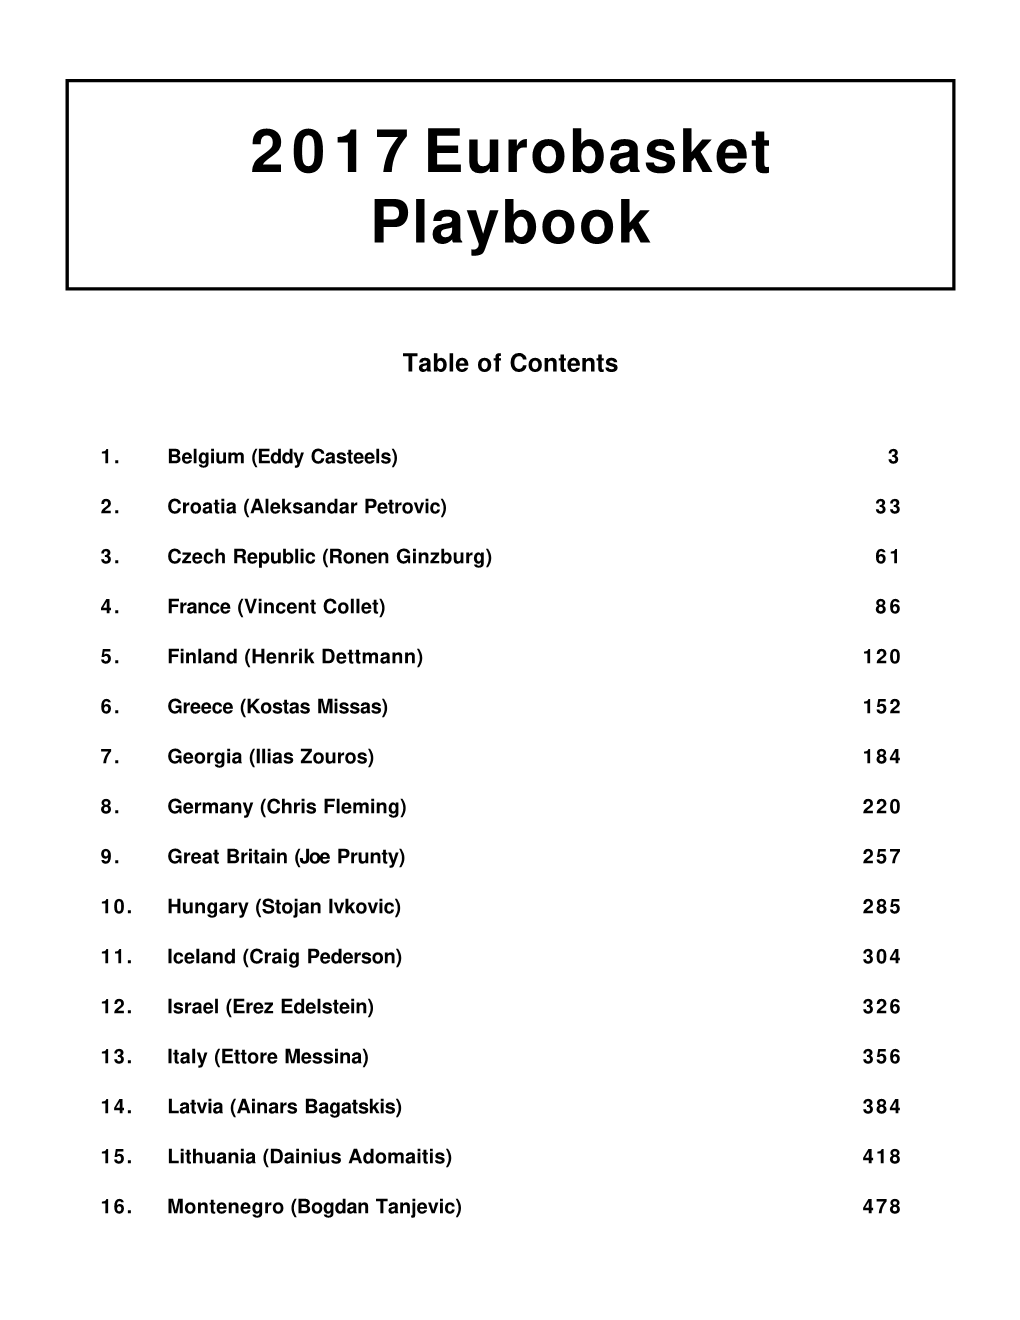 2017 Eurobasket Playbook - Contents (Cont.) 17